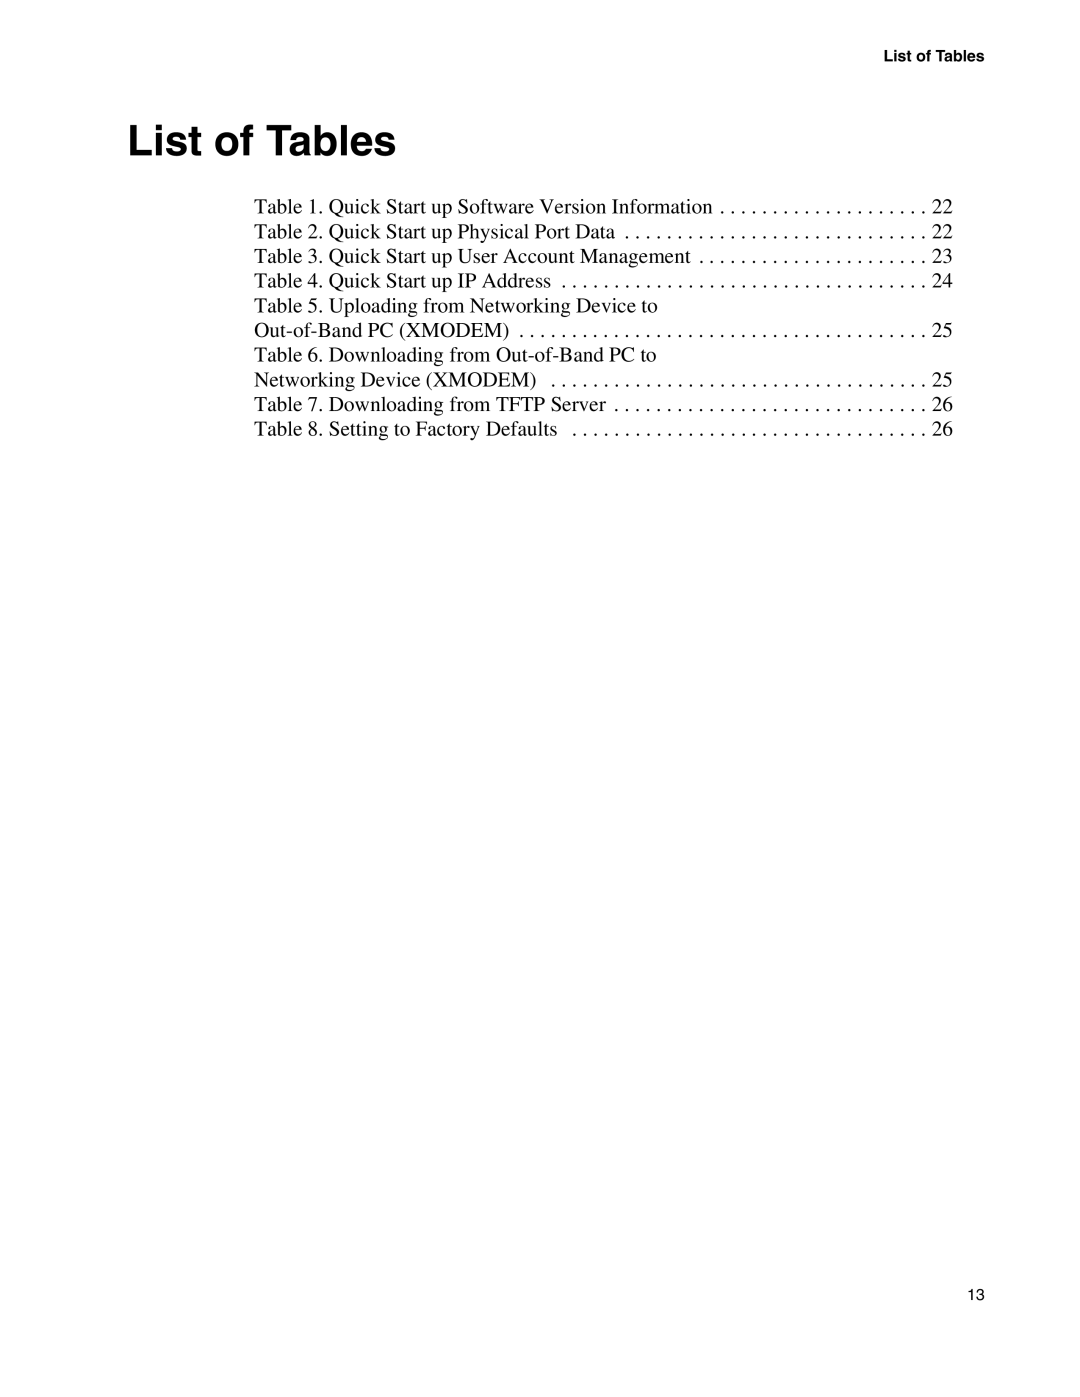 D-Link DWS-3000 manual List of Tables 